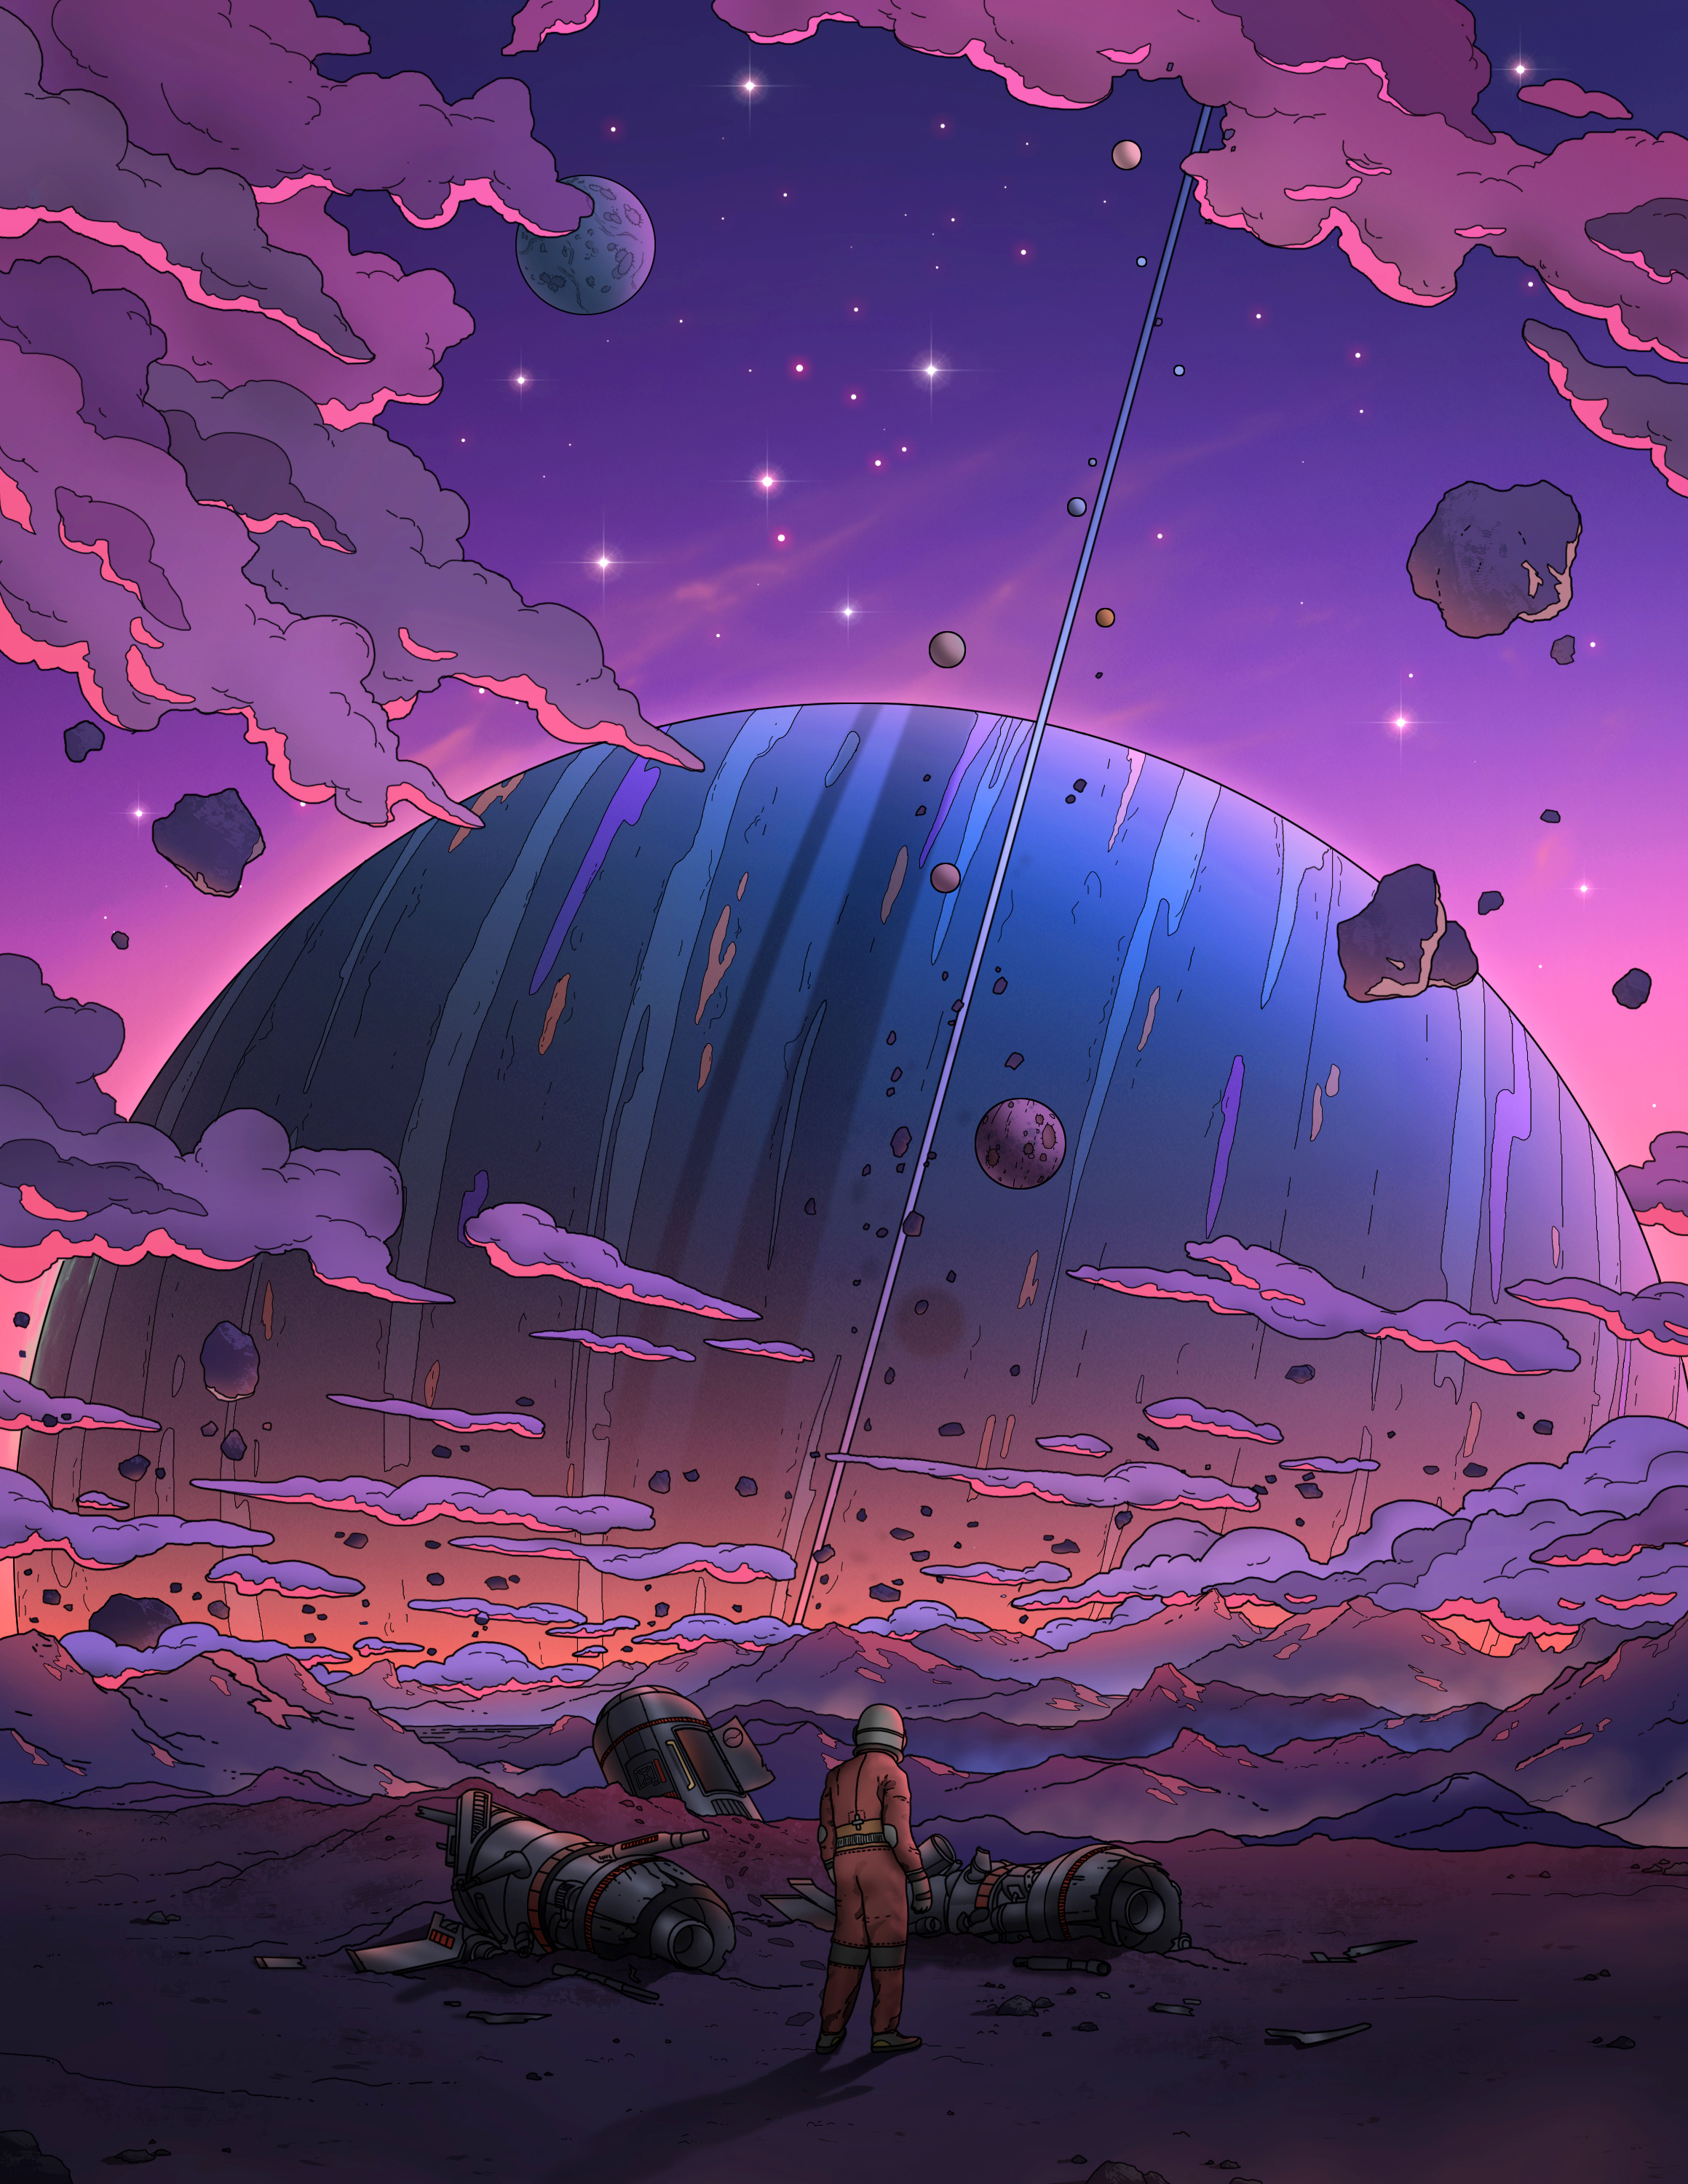 Christian Demczuk Artwork Digital Art Illustration Clouds Stars Planet Saturn Mountains Astronaut Ab 2319x3000